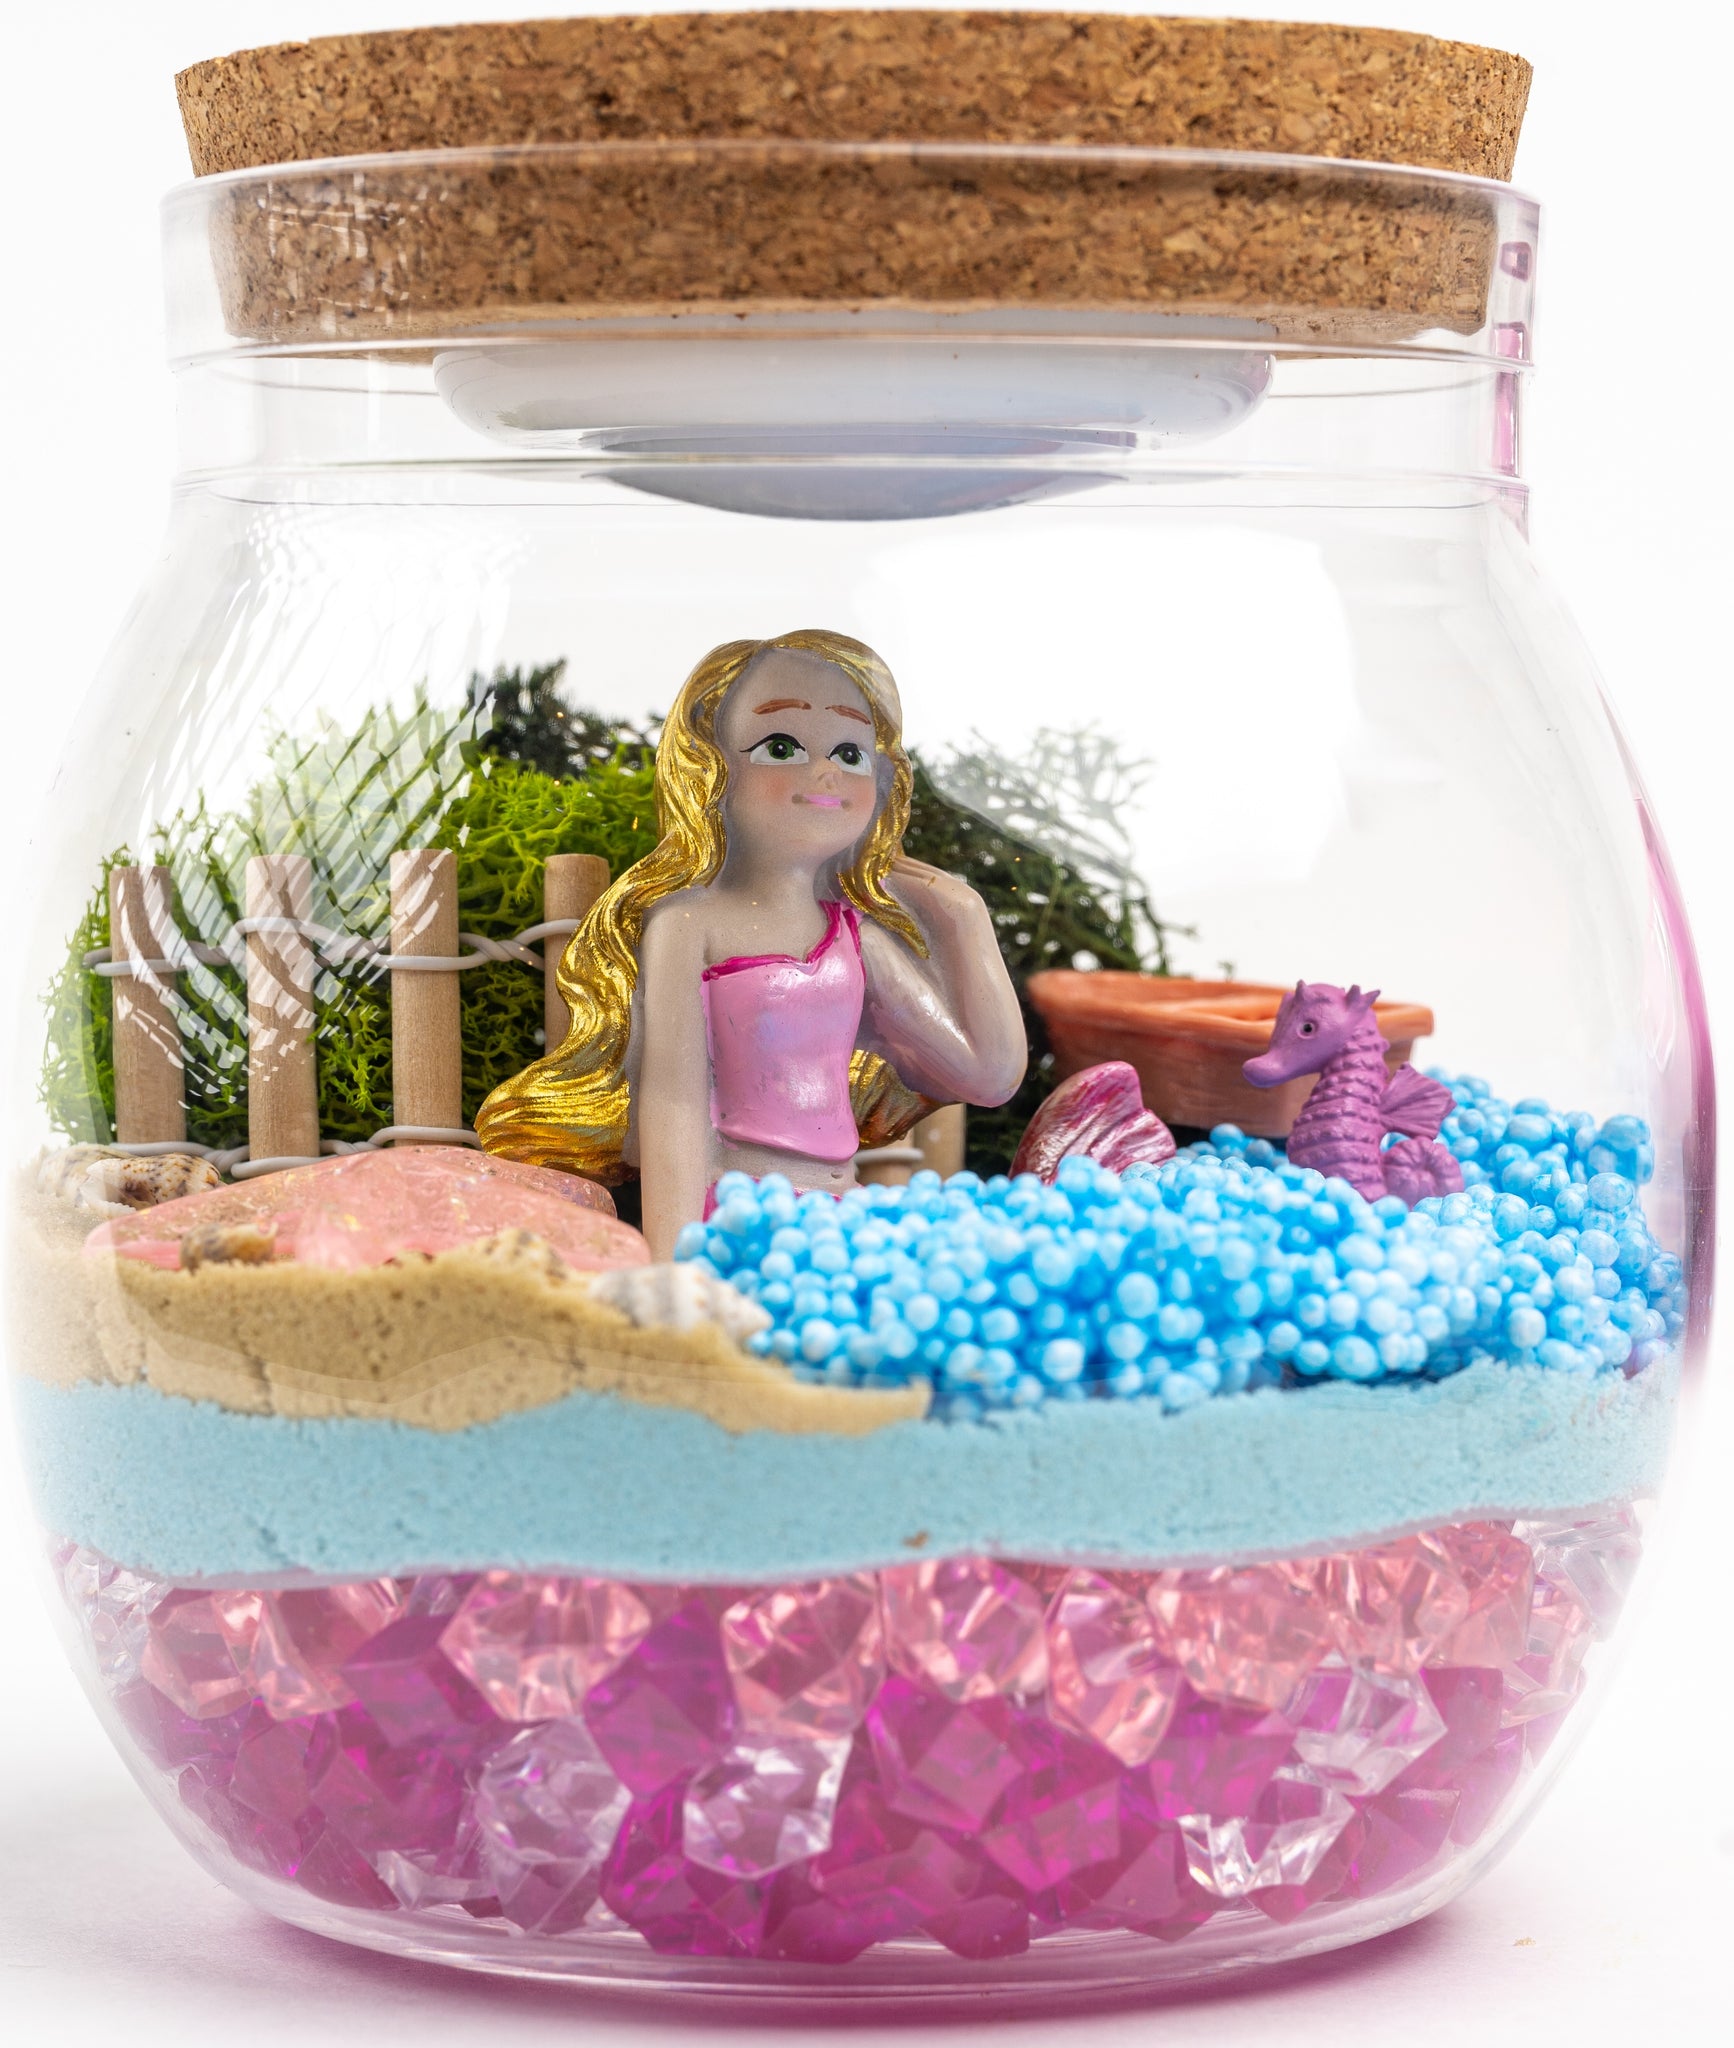 Mermaid Light Up Terrarium Kit for Kids I DIY Mermaid Toys Craft